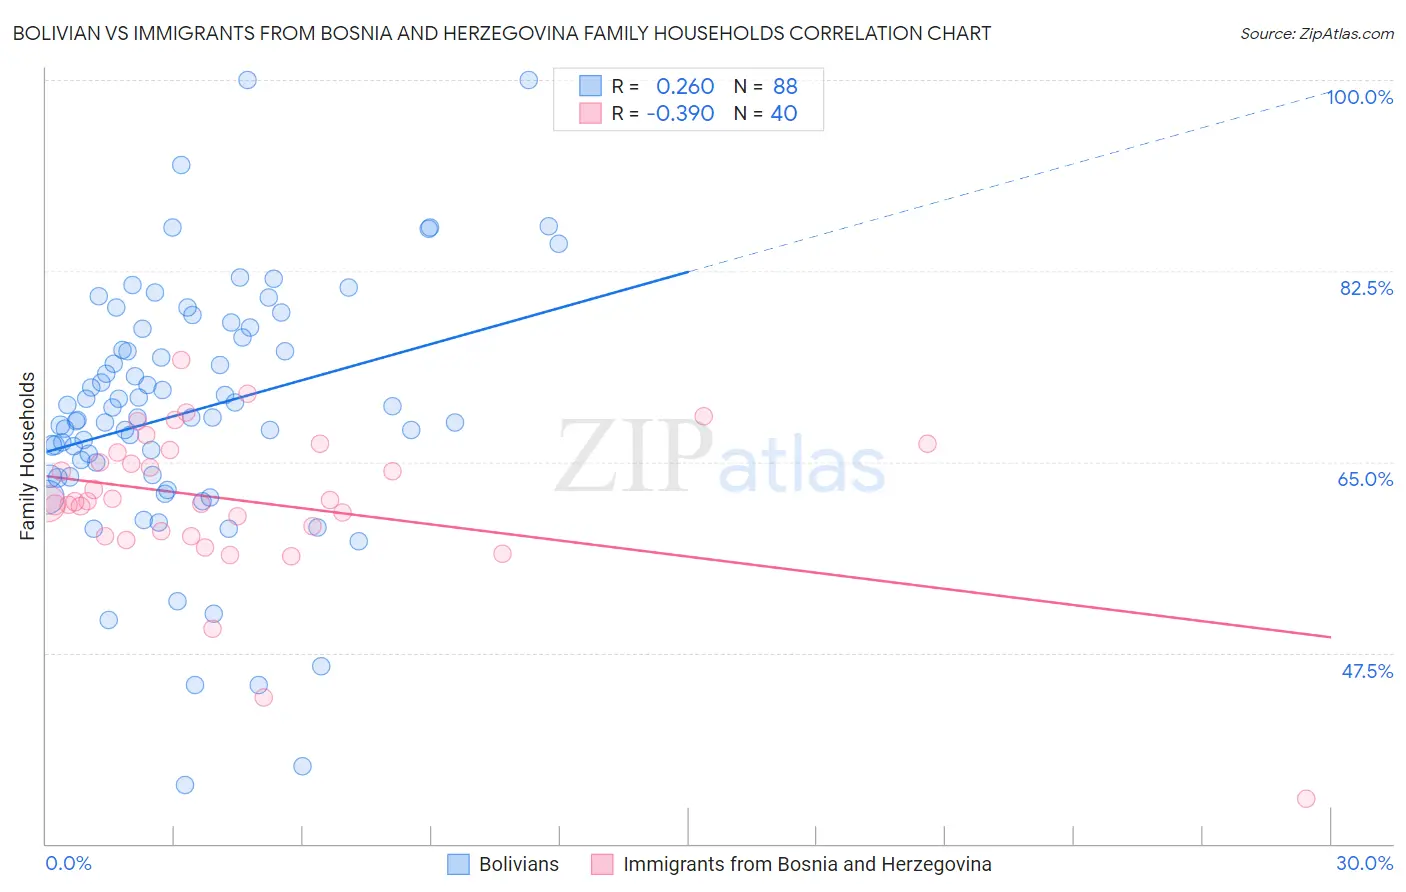 Bolivian vs Immigrants from Bosnia and Herzegovina Family Households